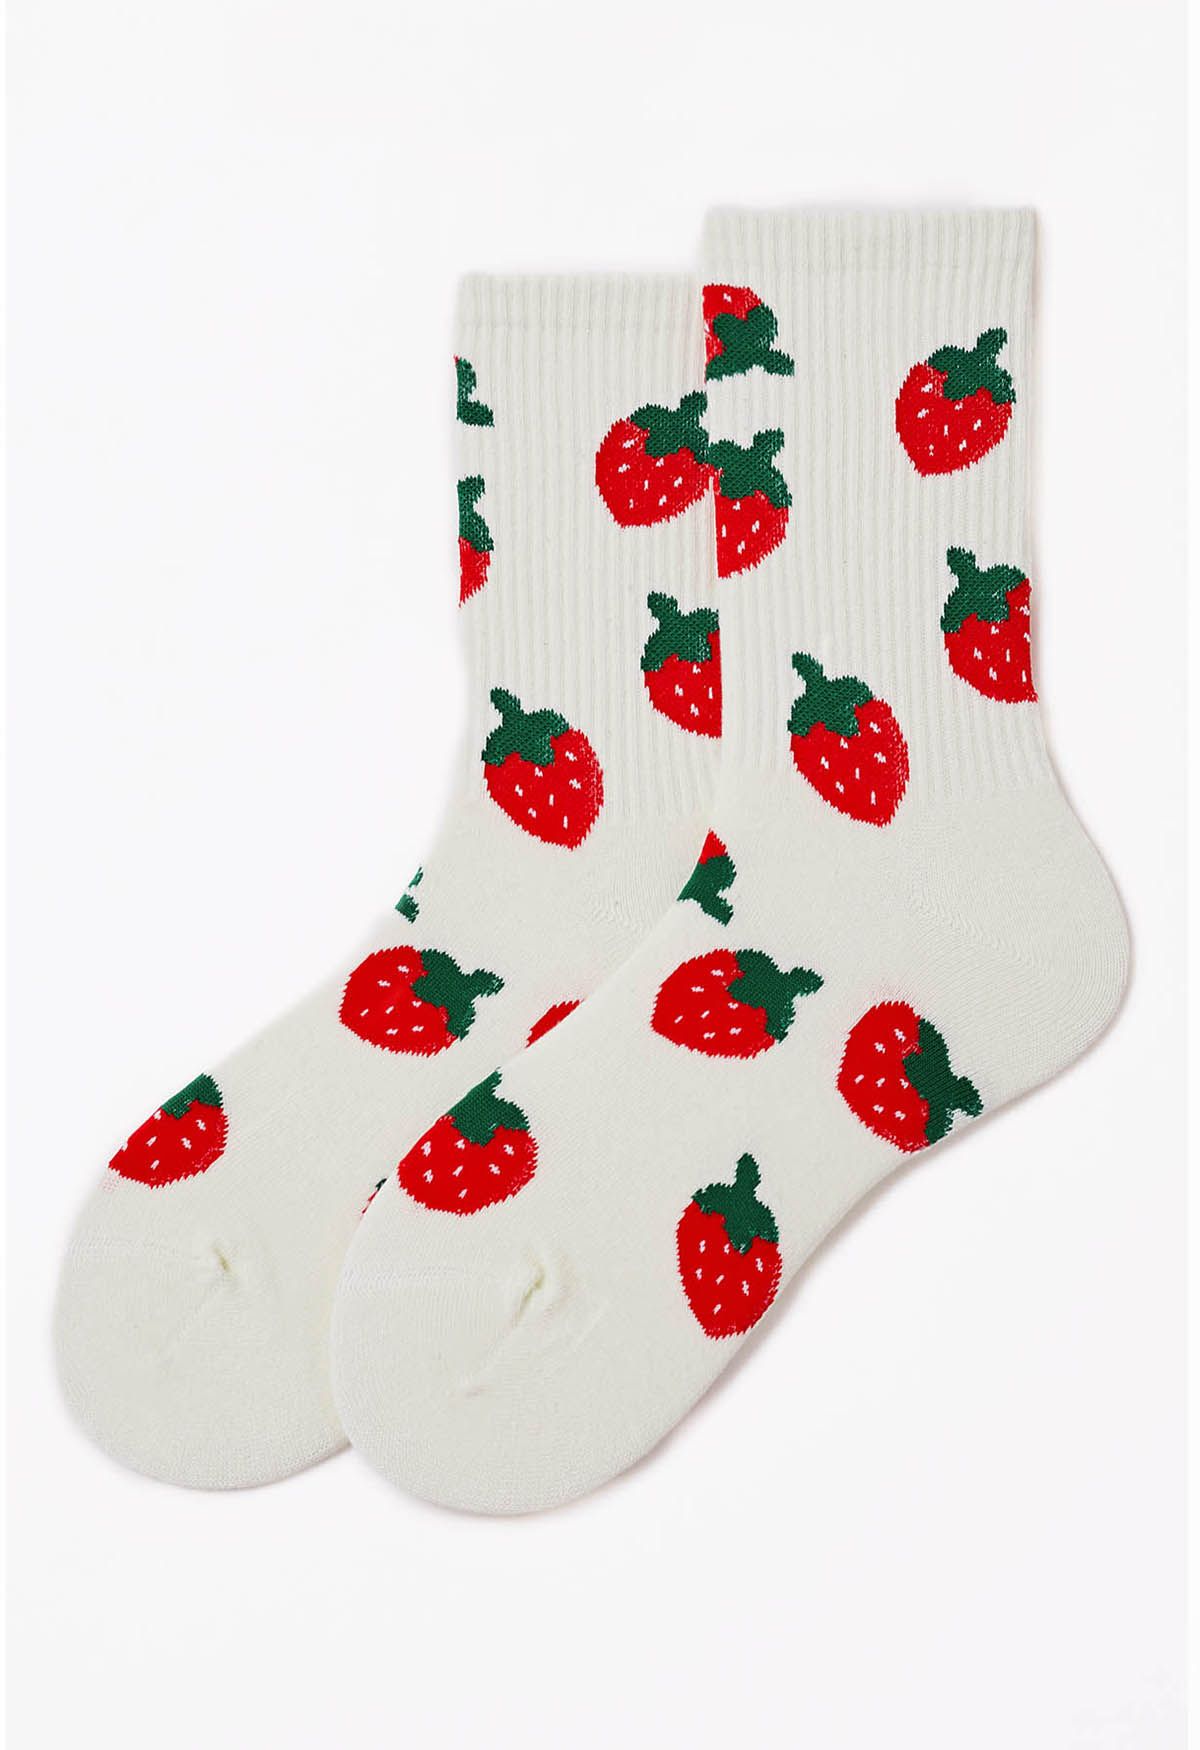 Cartoon Strawberry Cotton Crew Socks